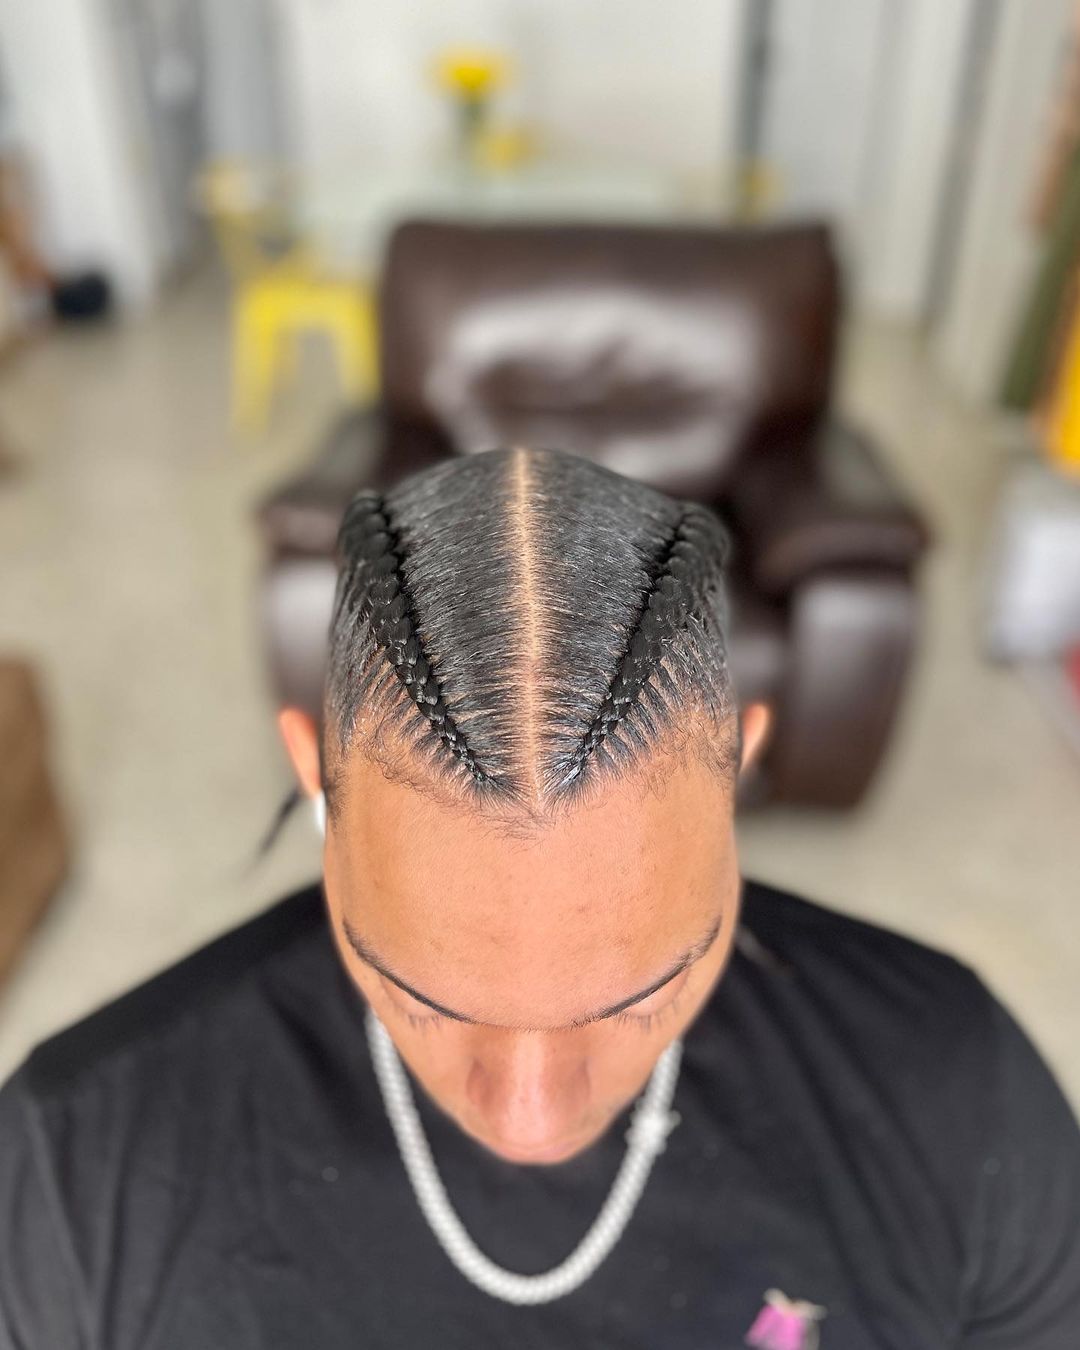 Braid Hairstyles for men 114 Black male braids short hair | Box braids men | Braid styles for men gallery Braid Hairstyles for Men